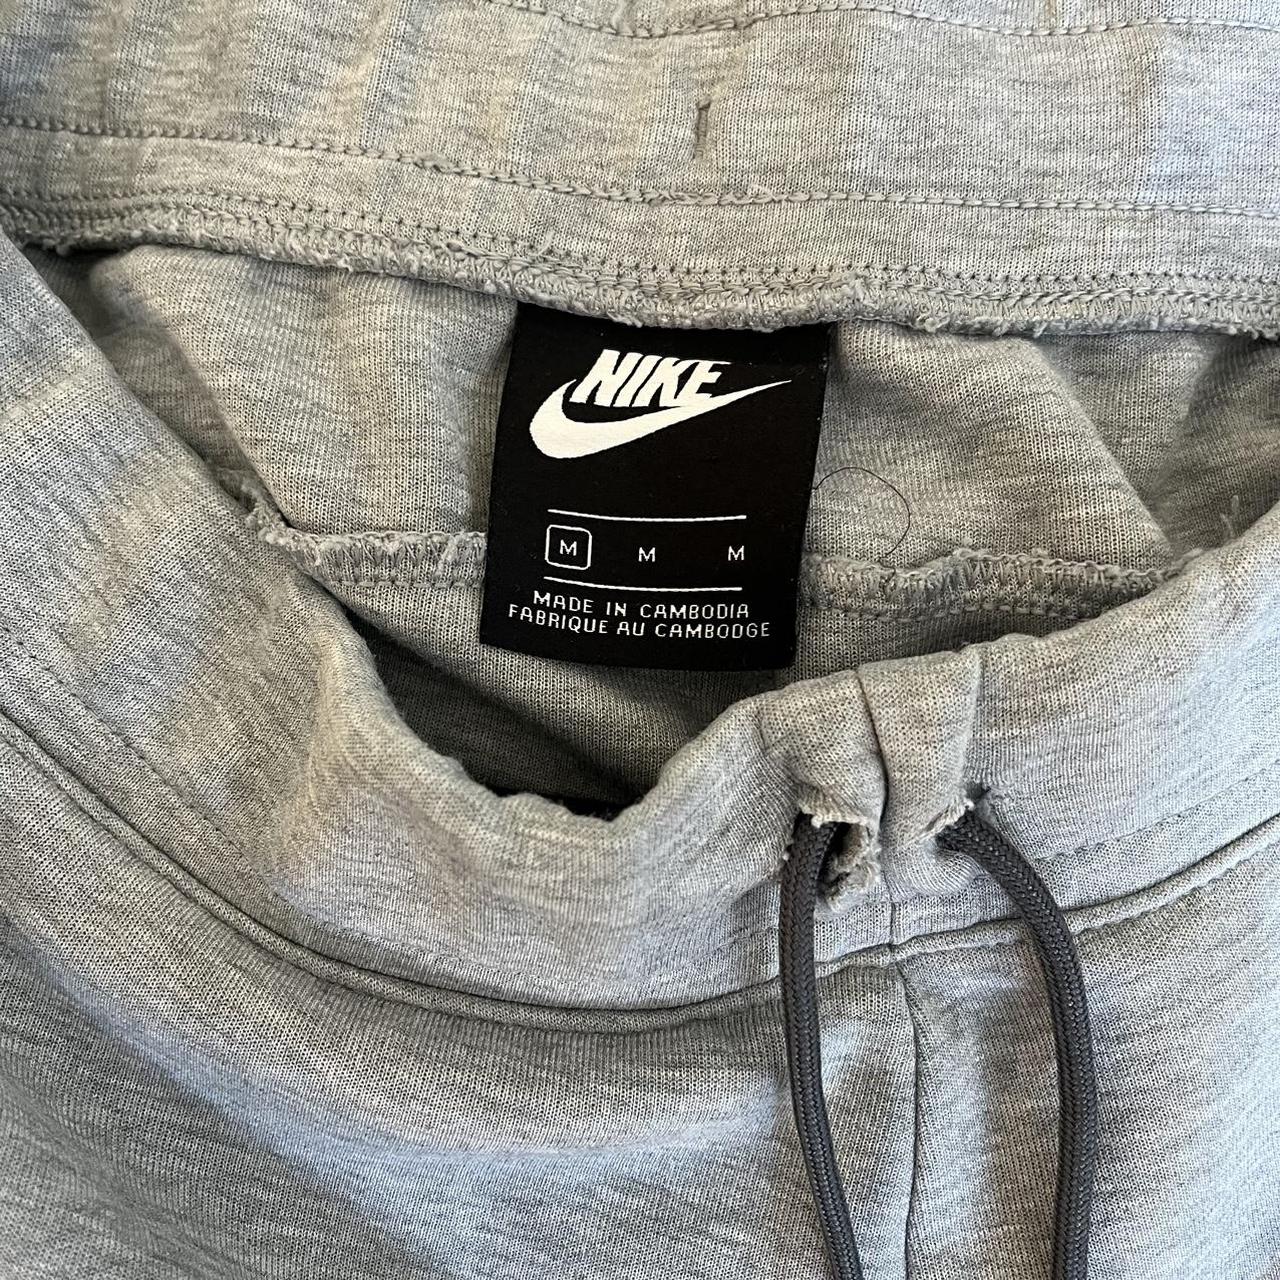 Nike tech fleece grey joggers 7/10 condition Size... - Depop